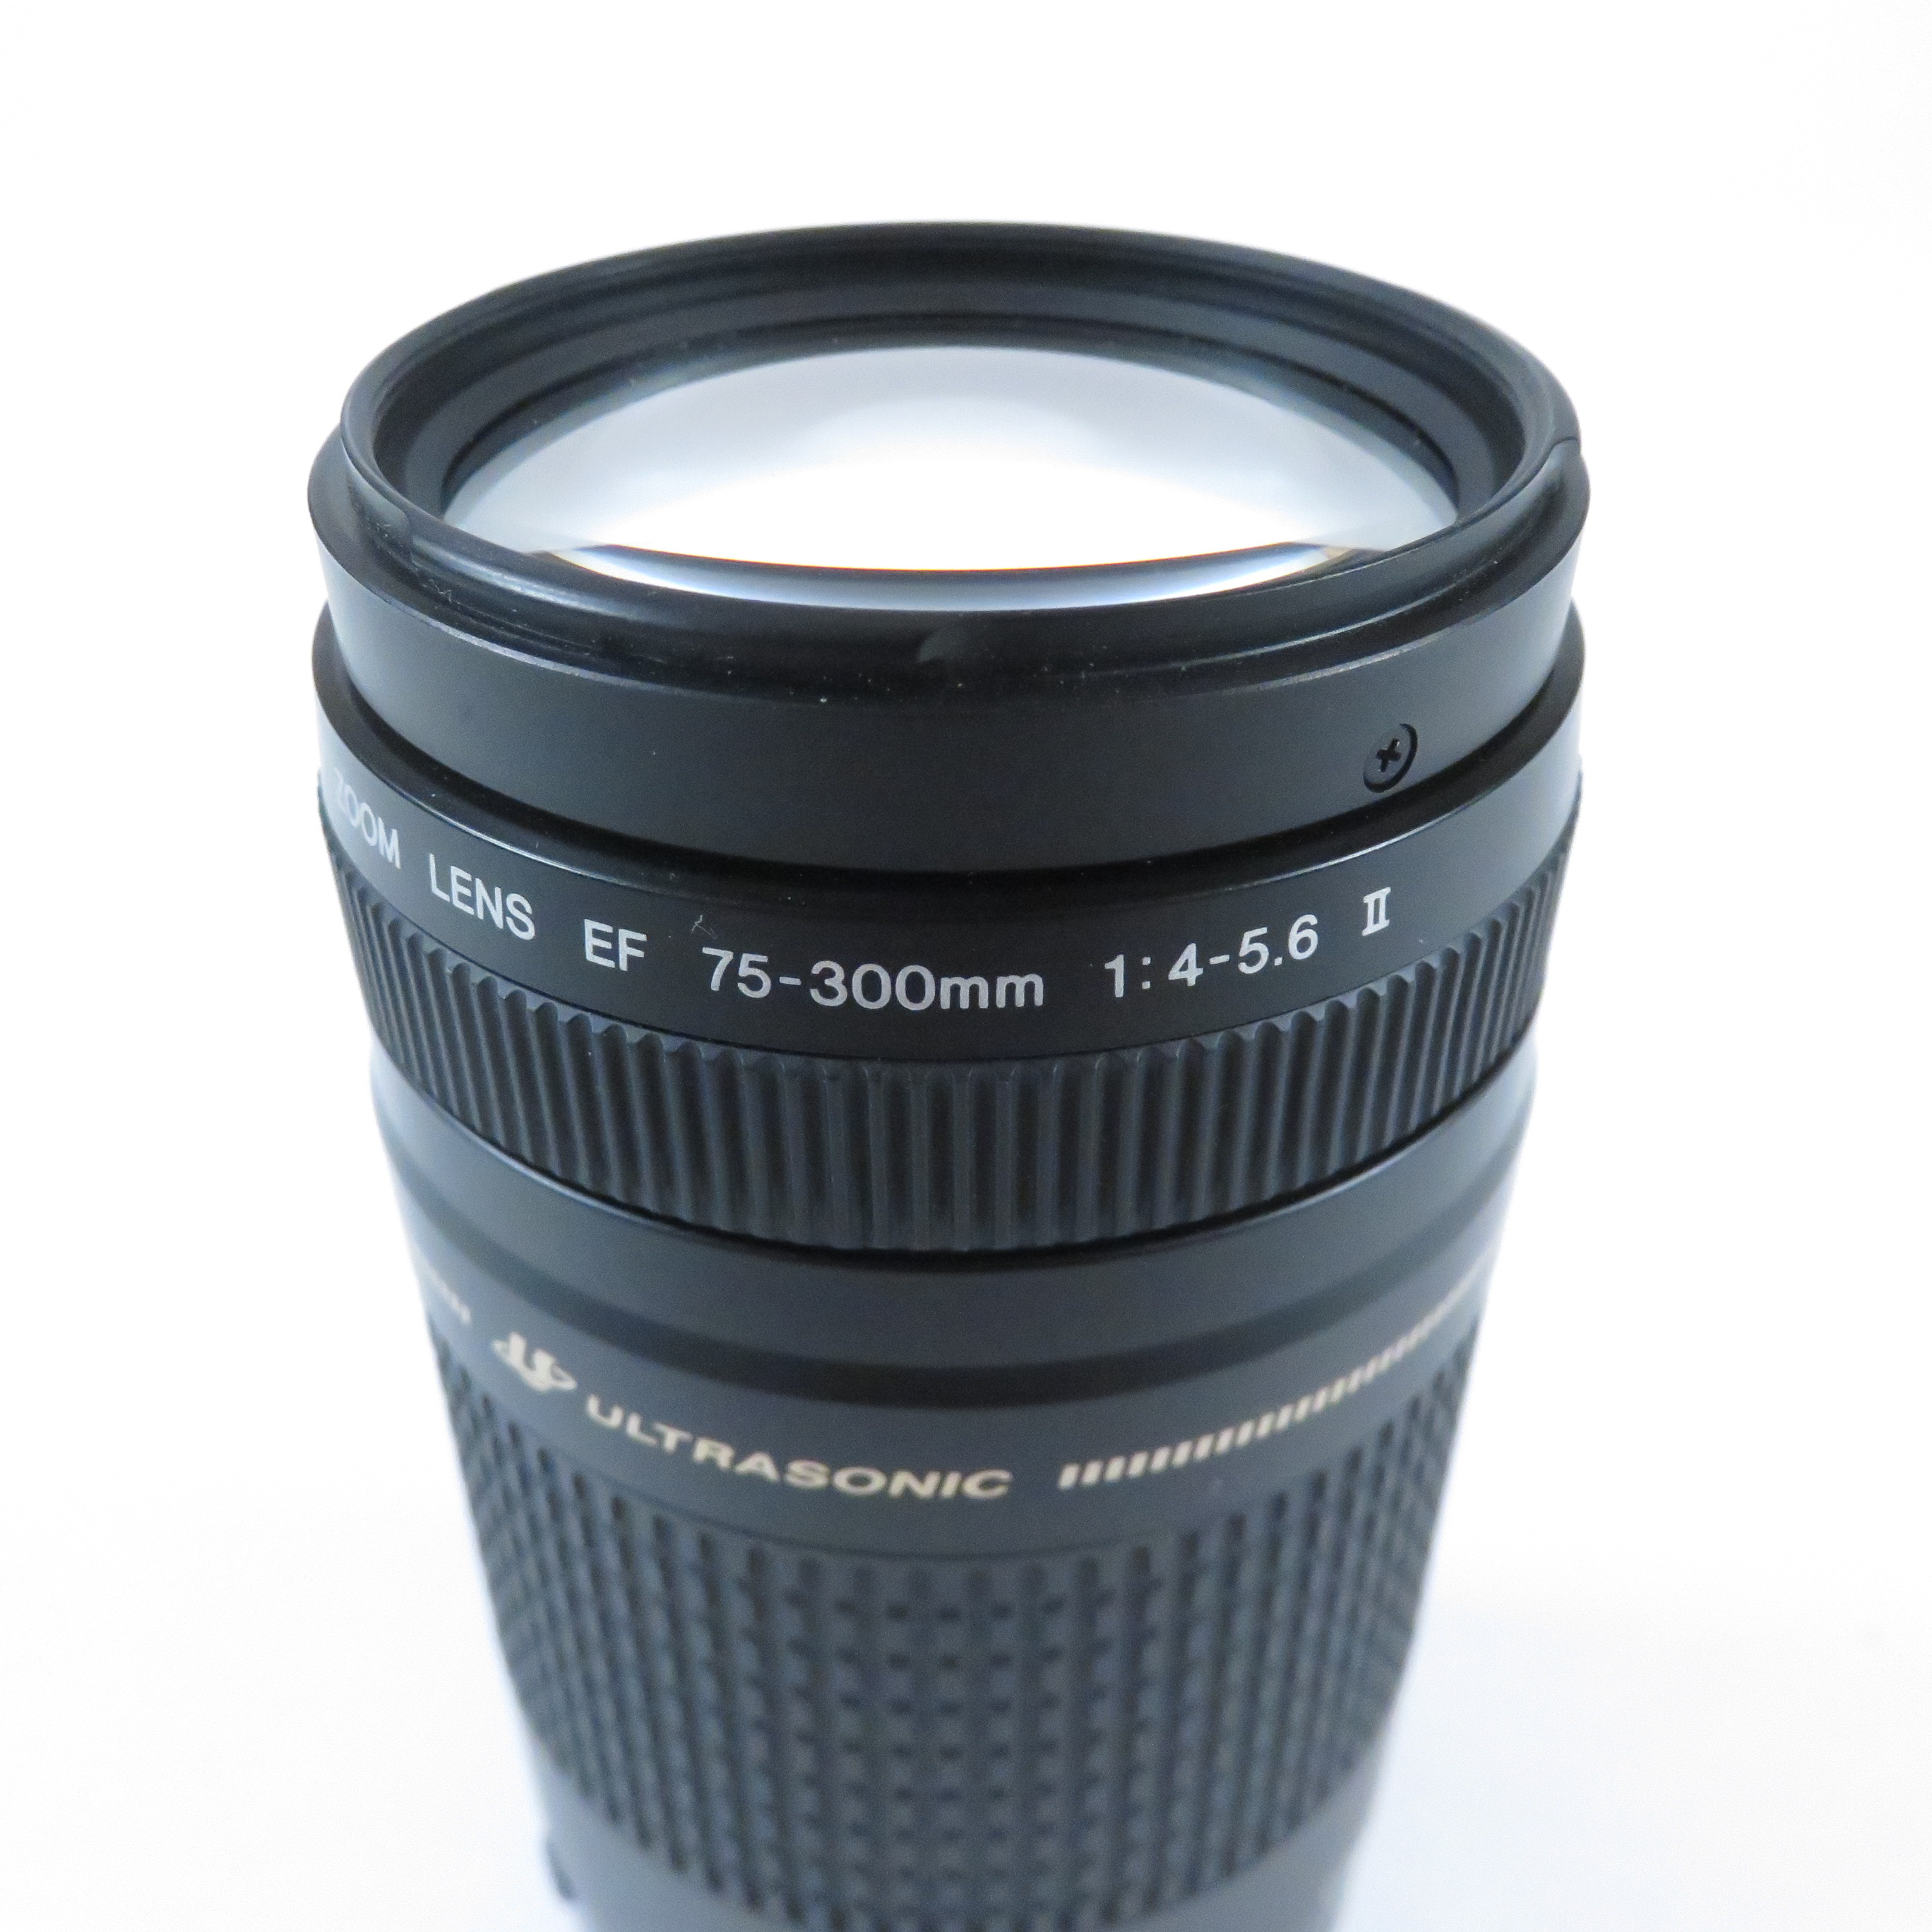 Canon EF 75-300mm 1:4-5.6 II USM Telephoto Zoom Lens